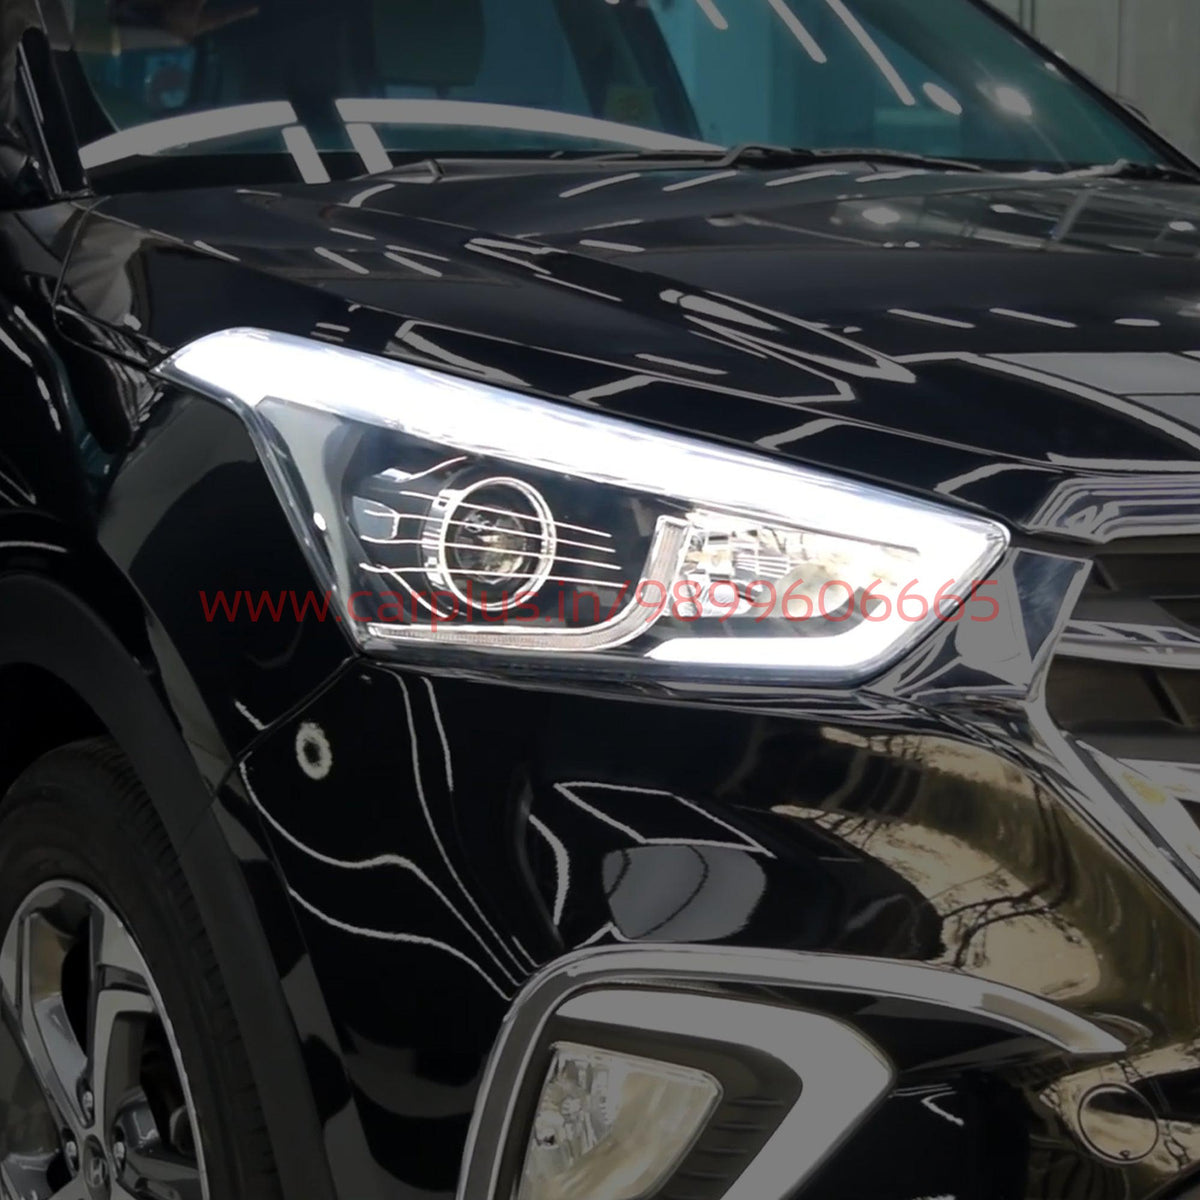 KMH Head Light Cover Chrome For Hyundai Creta (1st GEN, 1st GEN FL)